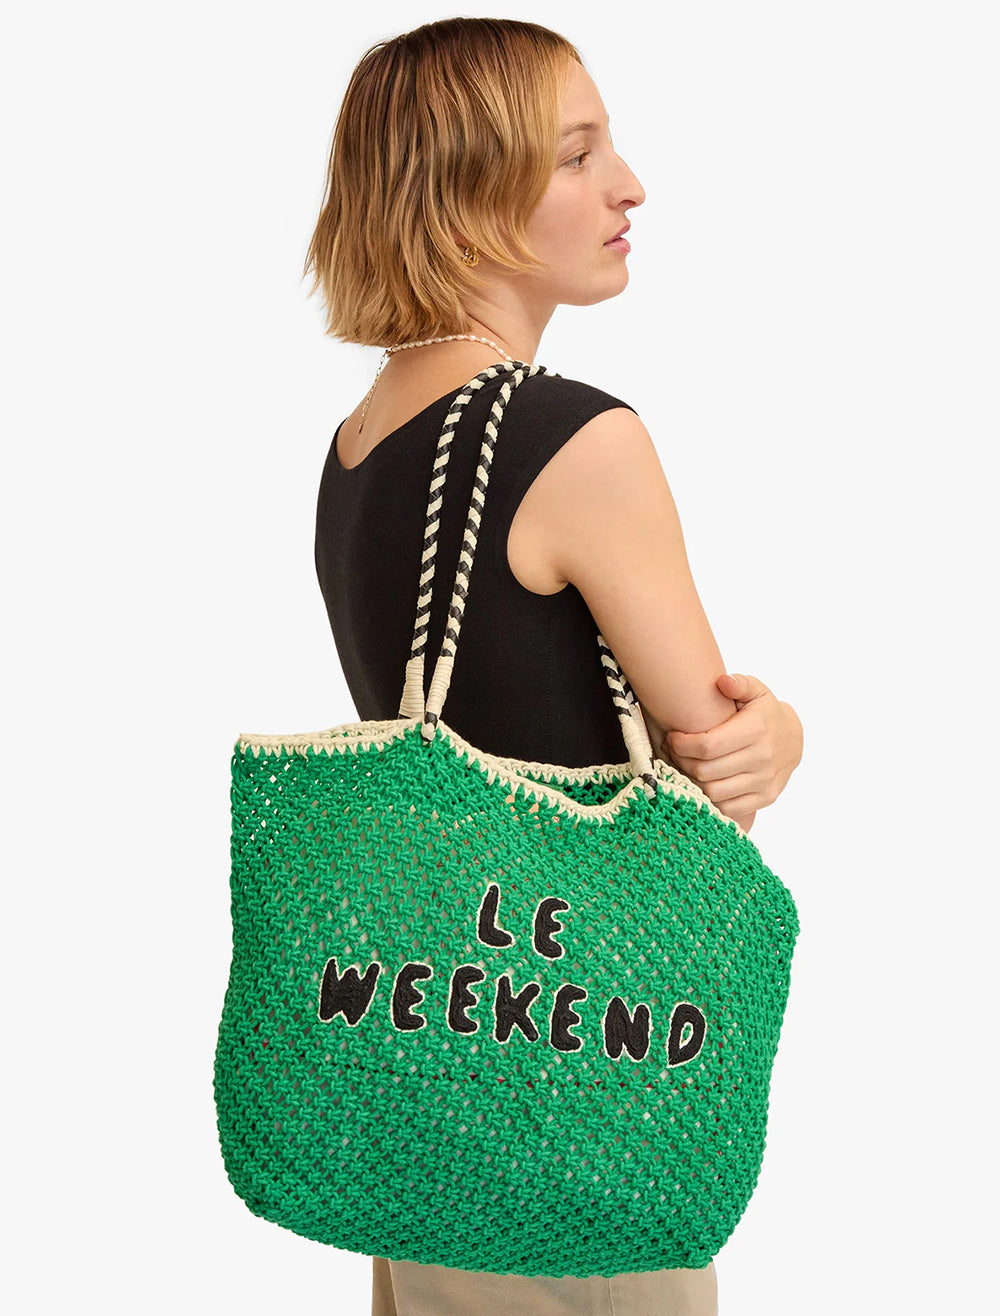 Model wearing Clare V.'s lete tote | green crochet le weekend on her shoulder.